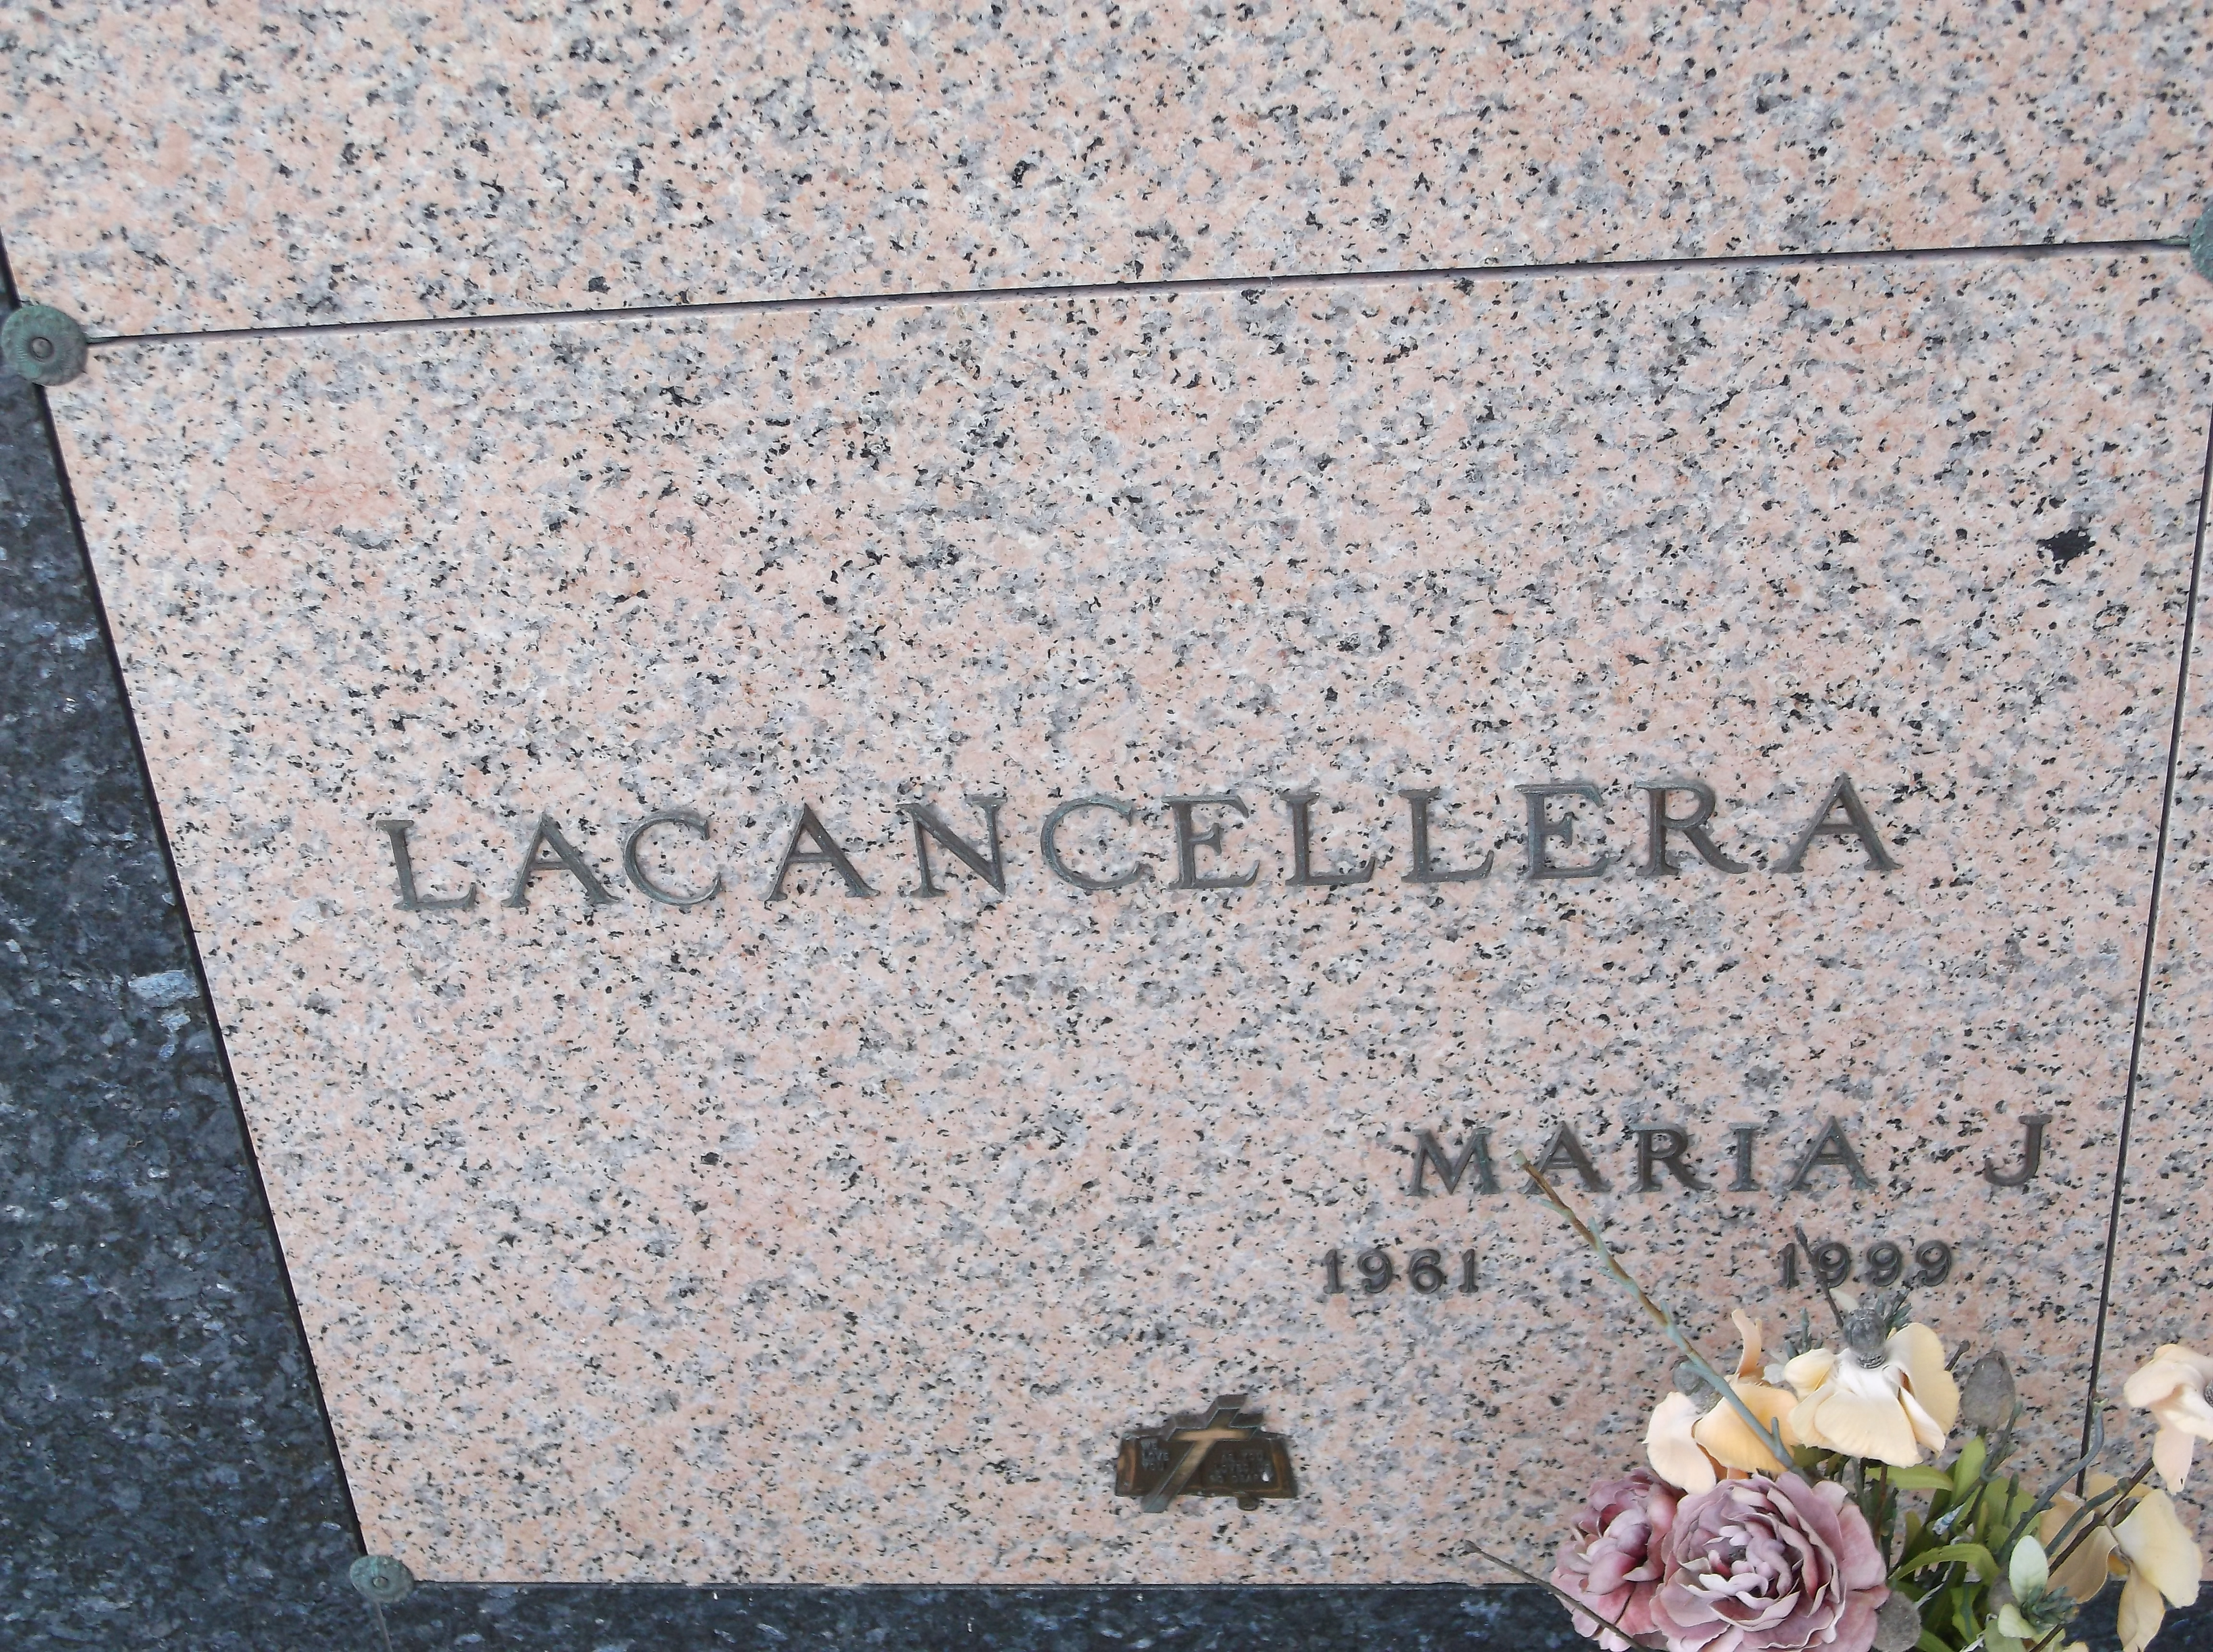 Maria J Lacancellera